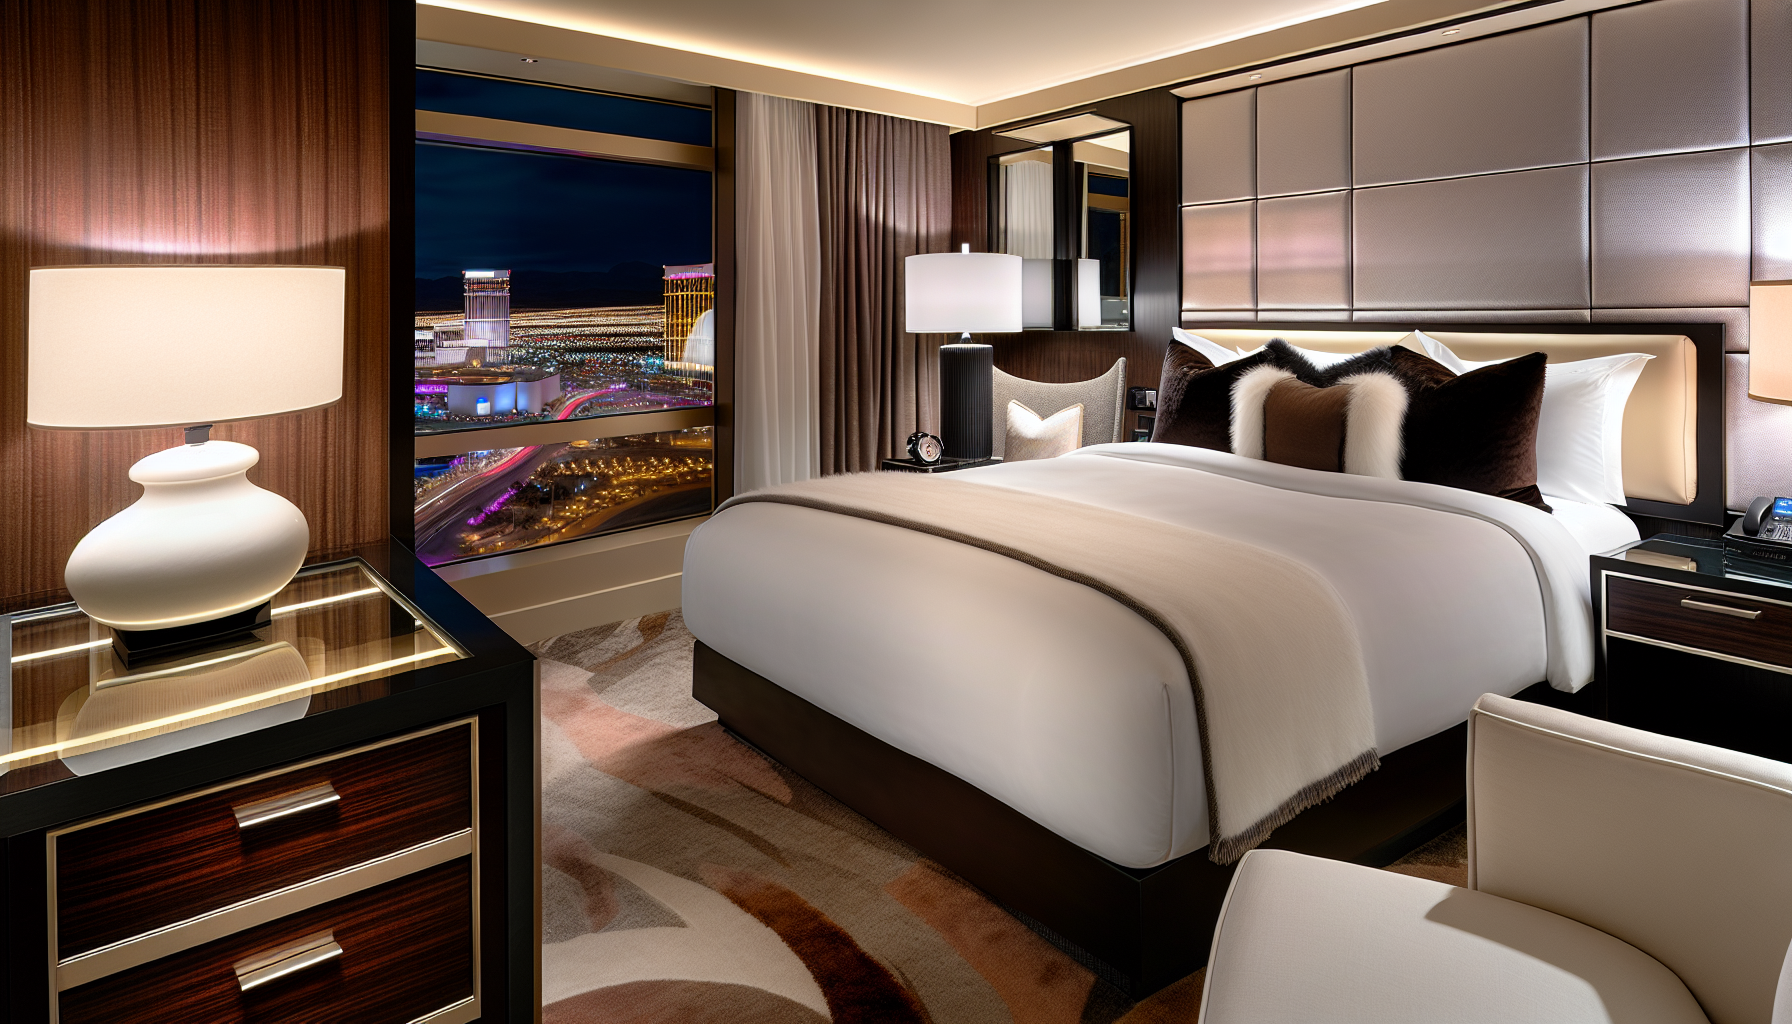 Luxurious hotel accommodation at a casino resort